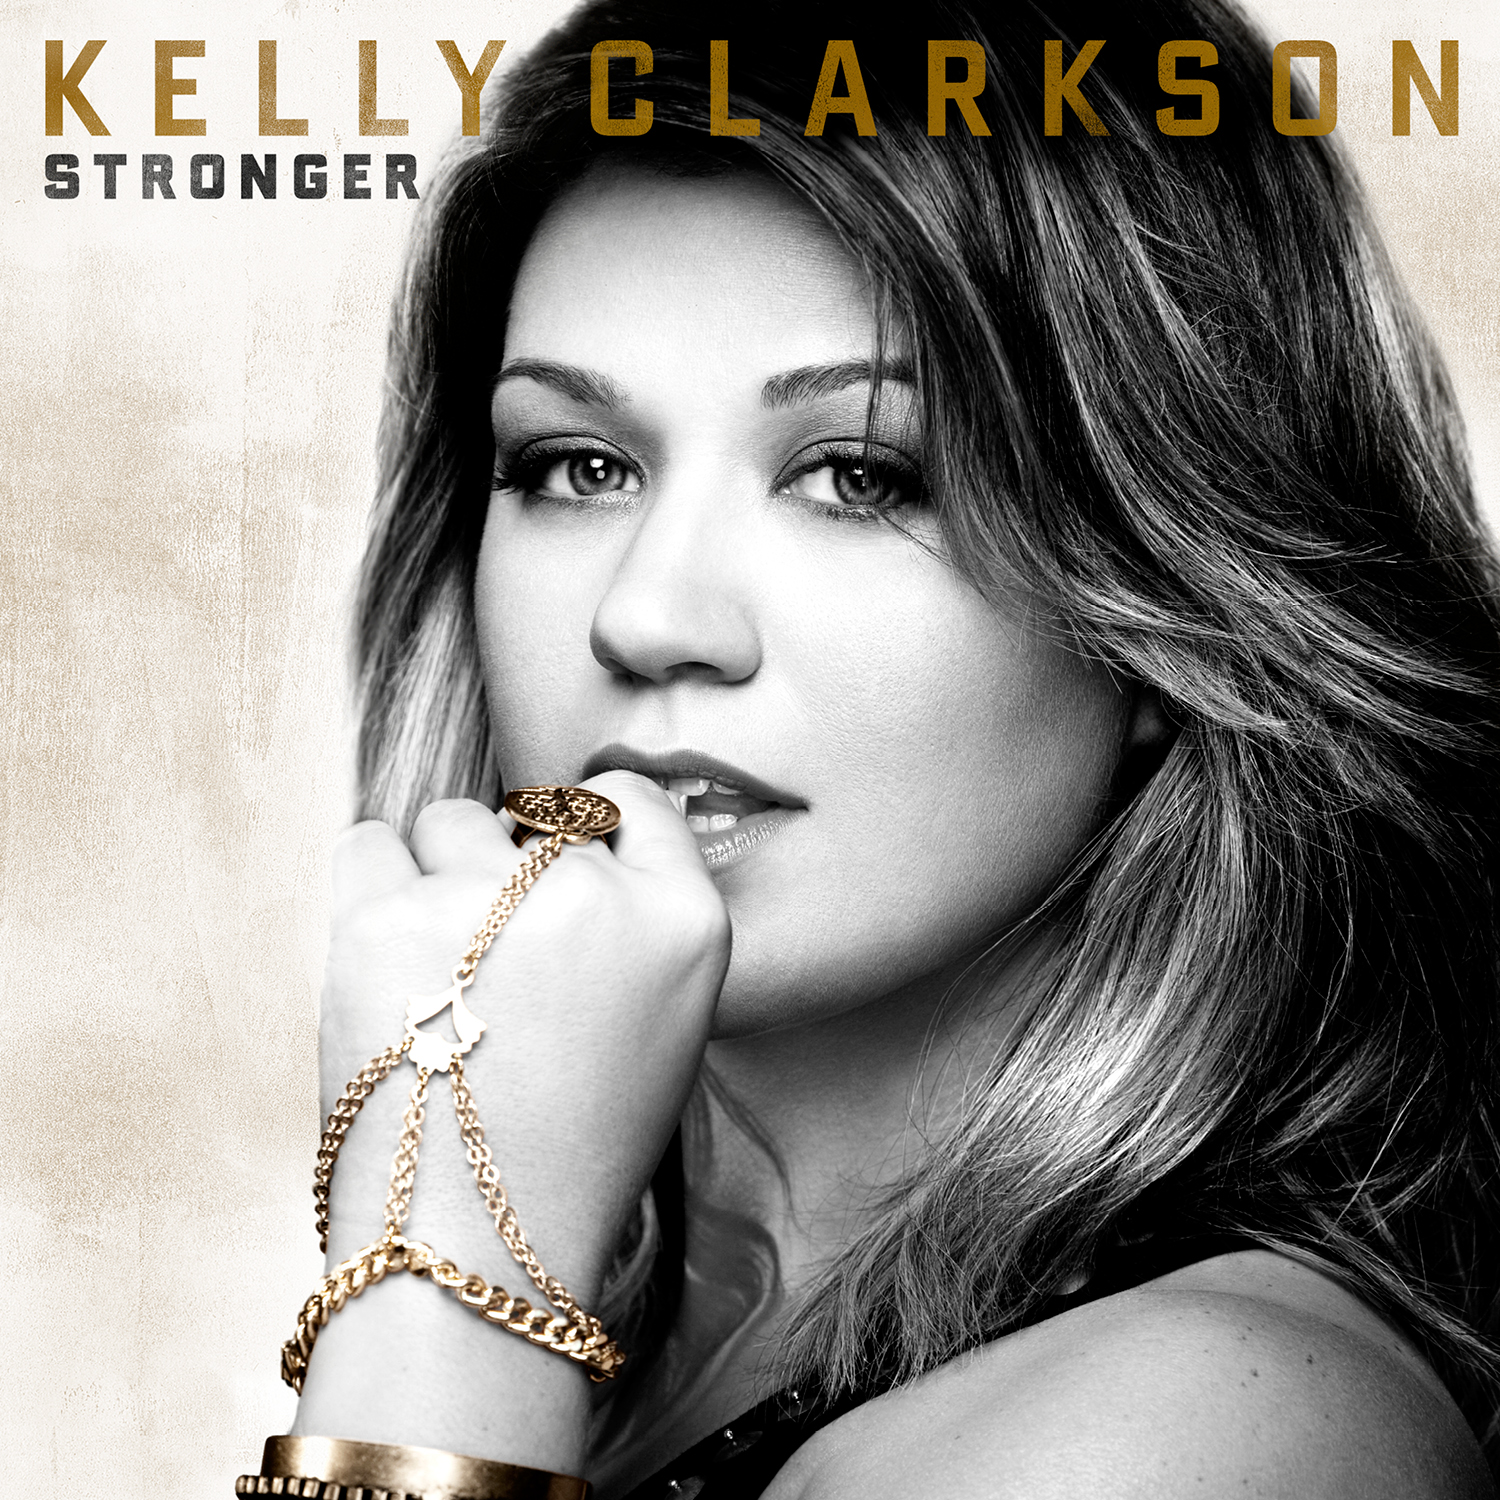 Kelly Clarkson image Stronger album cover HD wallpaper